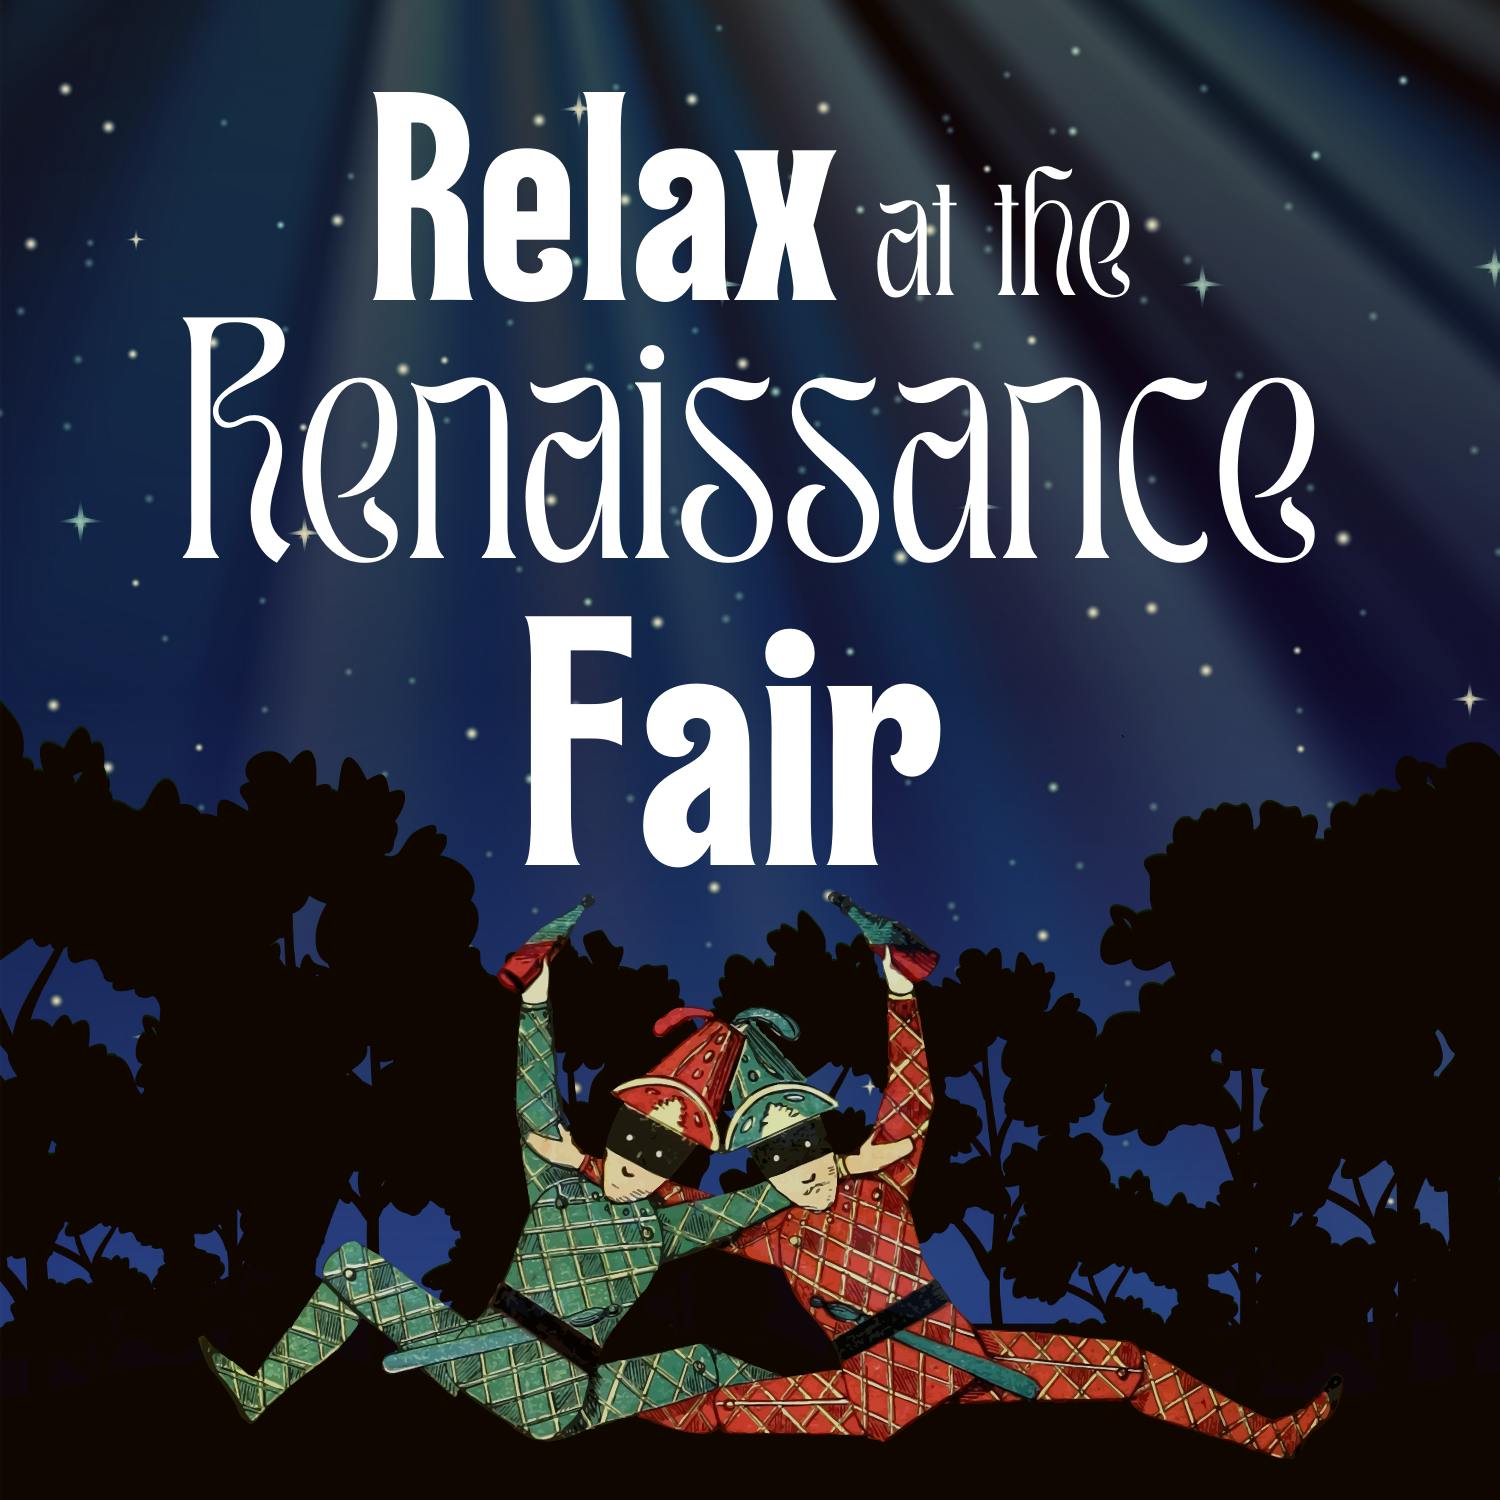 Relax at the Renaissance Fair